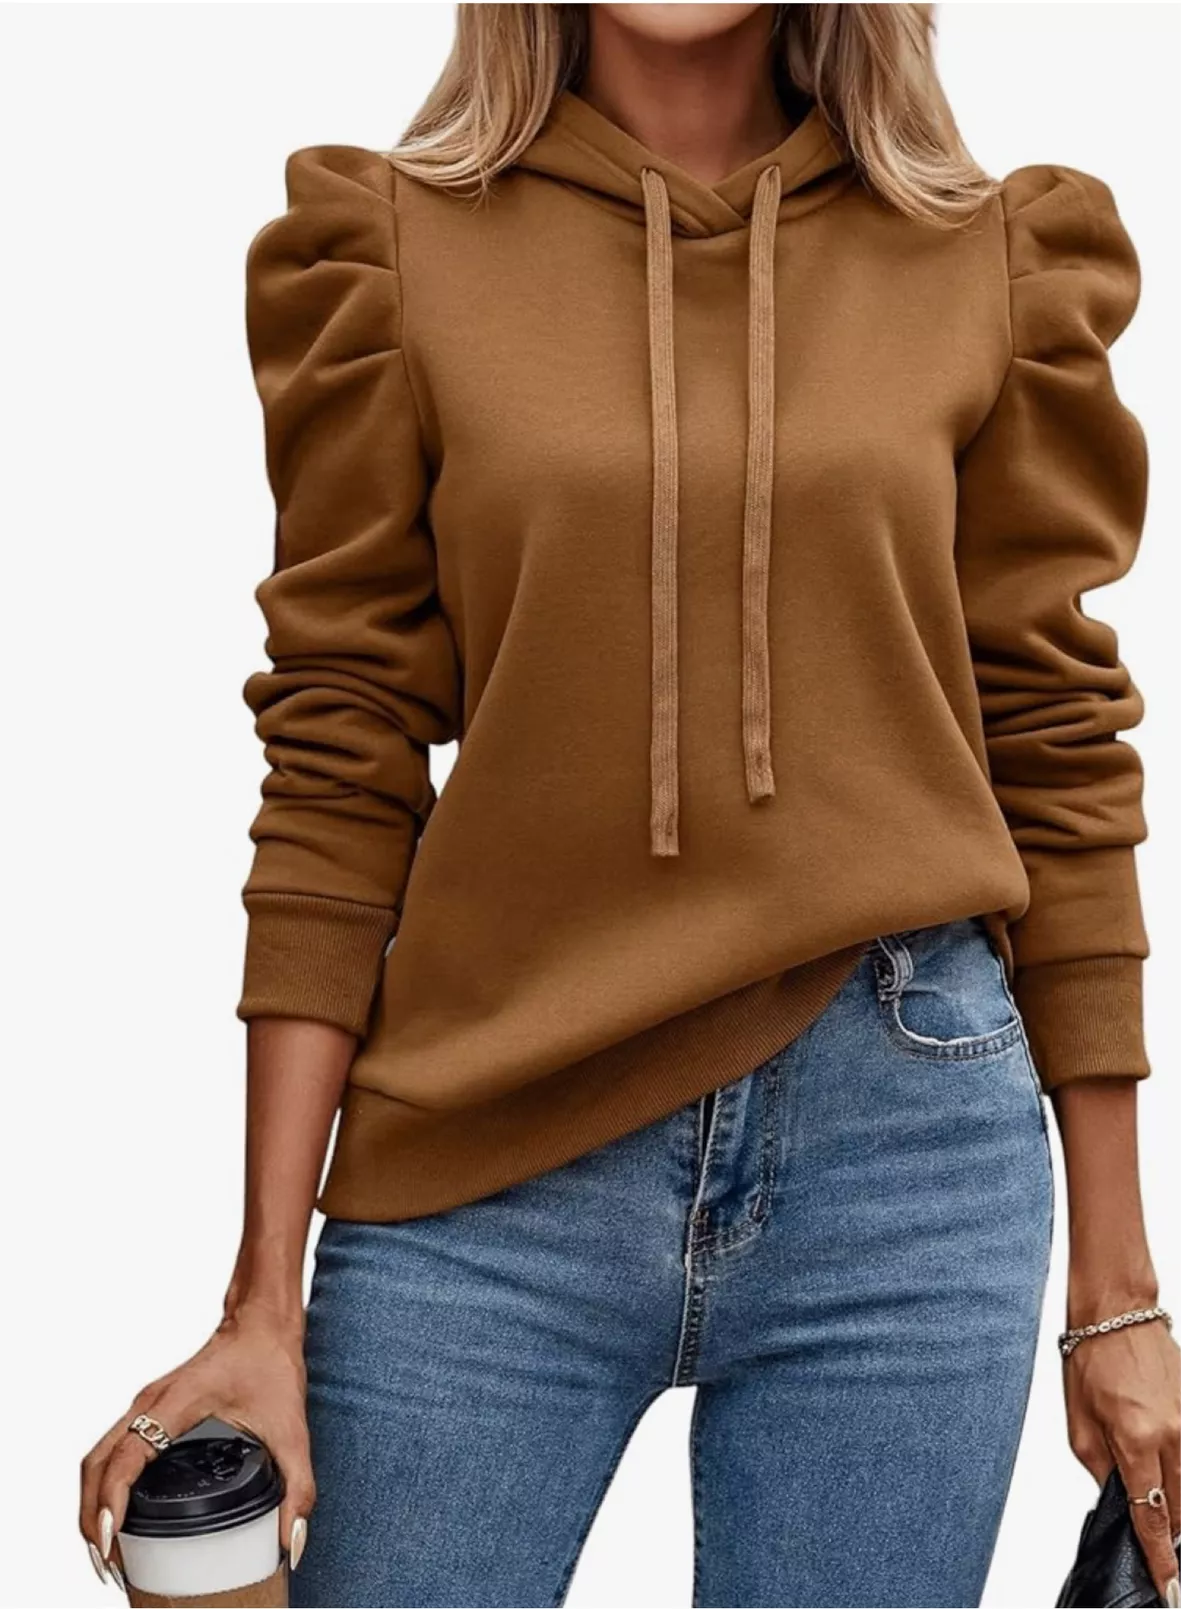 SOLY HUX Women's Casual Hoodies Sweatshirts Long Sleeve Basic